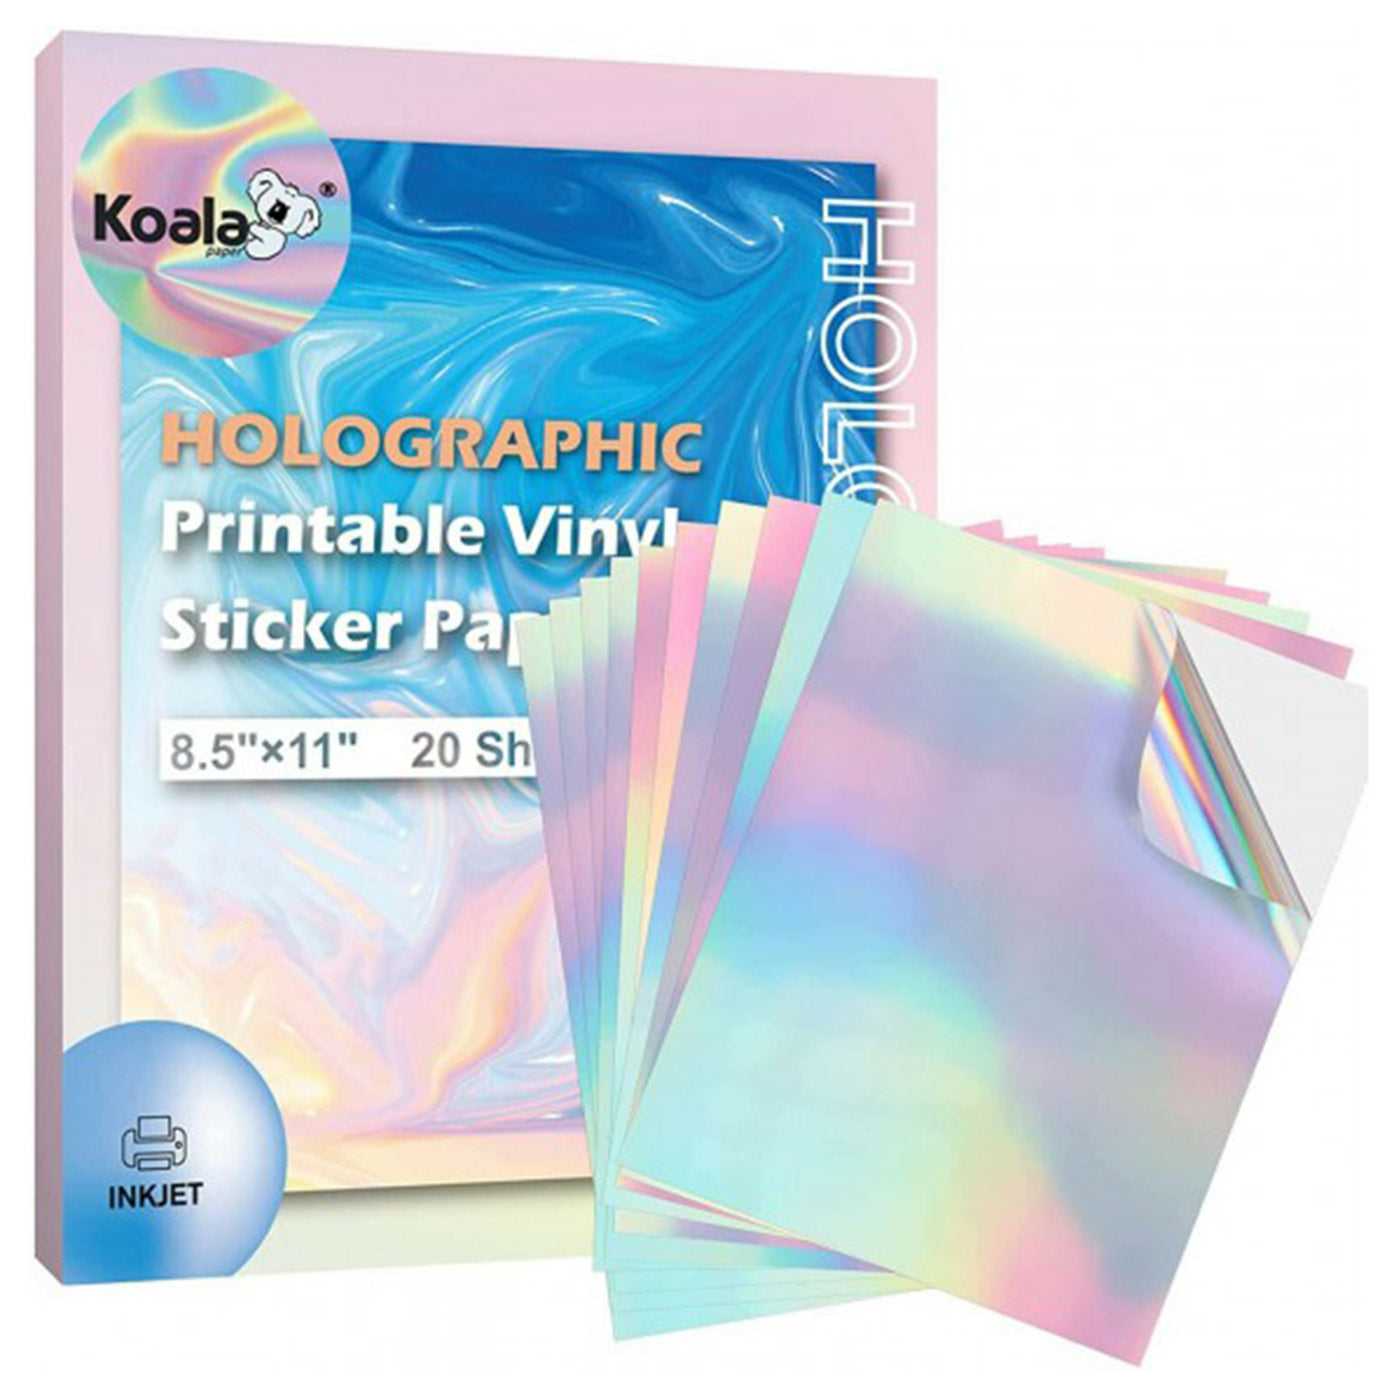 220 Sheets Koala Sticker Paper for Printers 8.5x11 Printable Full